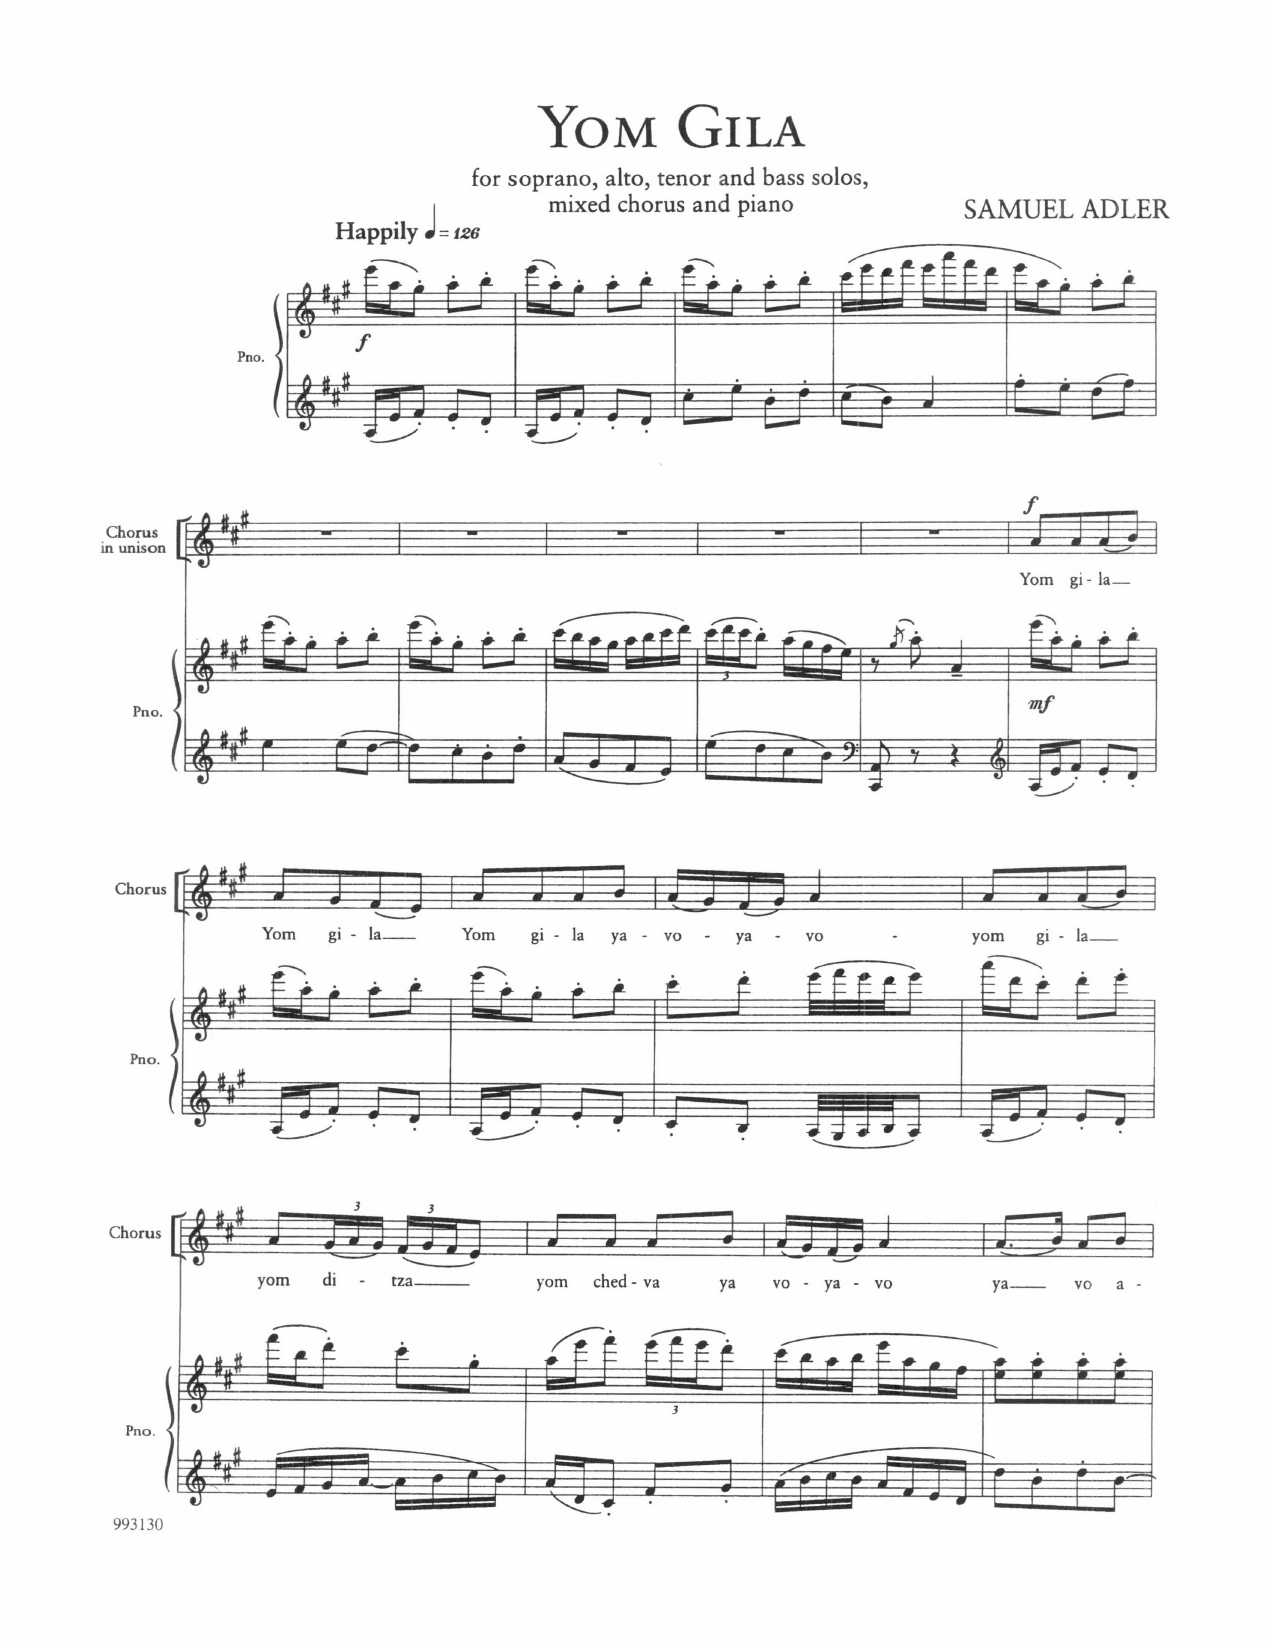 Download Samuel Adler Five Sephardic Choruses: Yom Gila Sheet Music and learn how to play SATB Choir PDF digital score in minutes